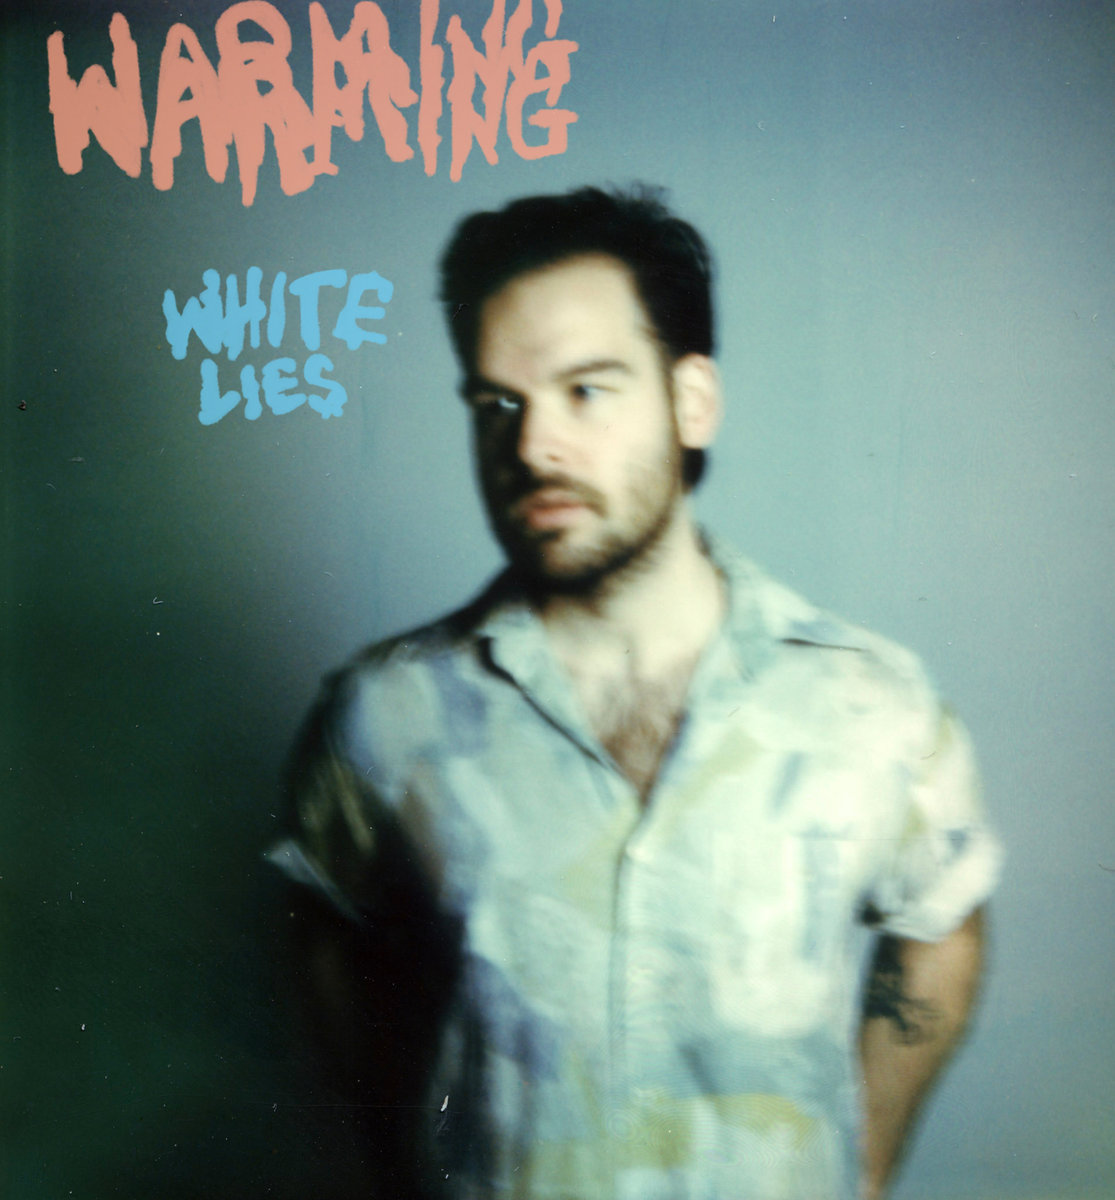 White Lies - White Lies - WarmingWarming